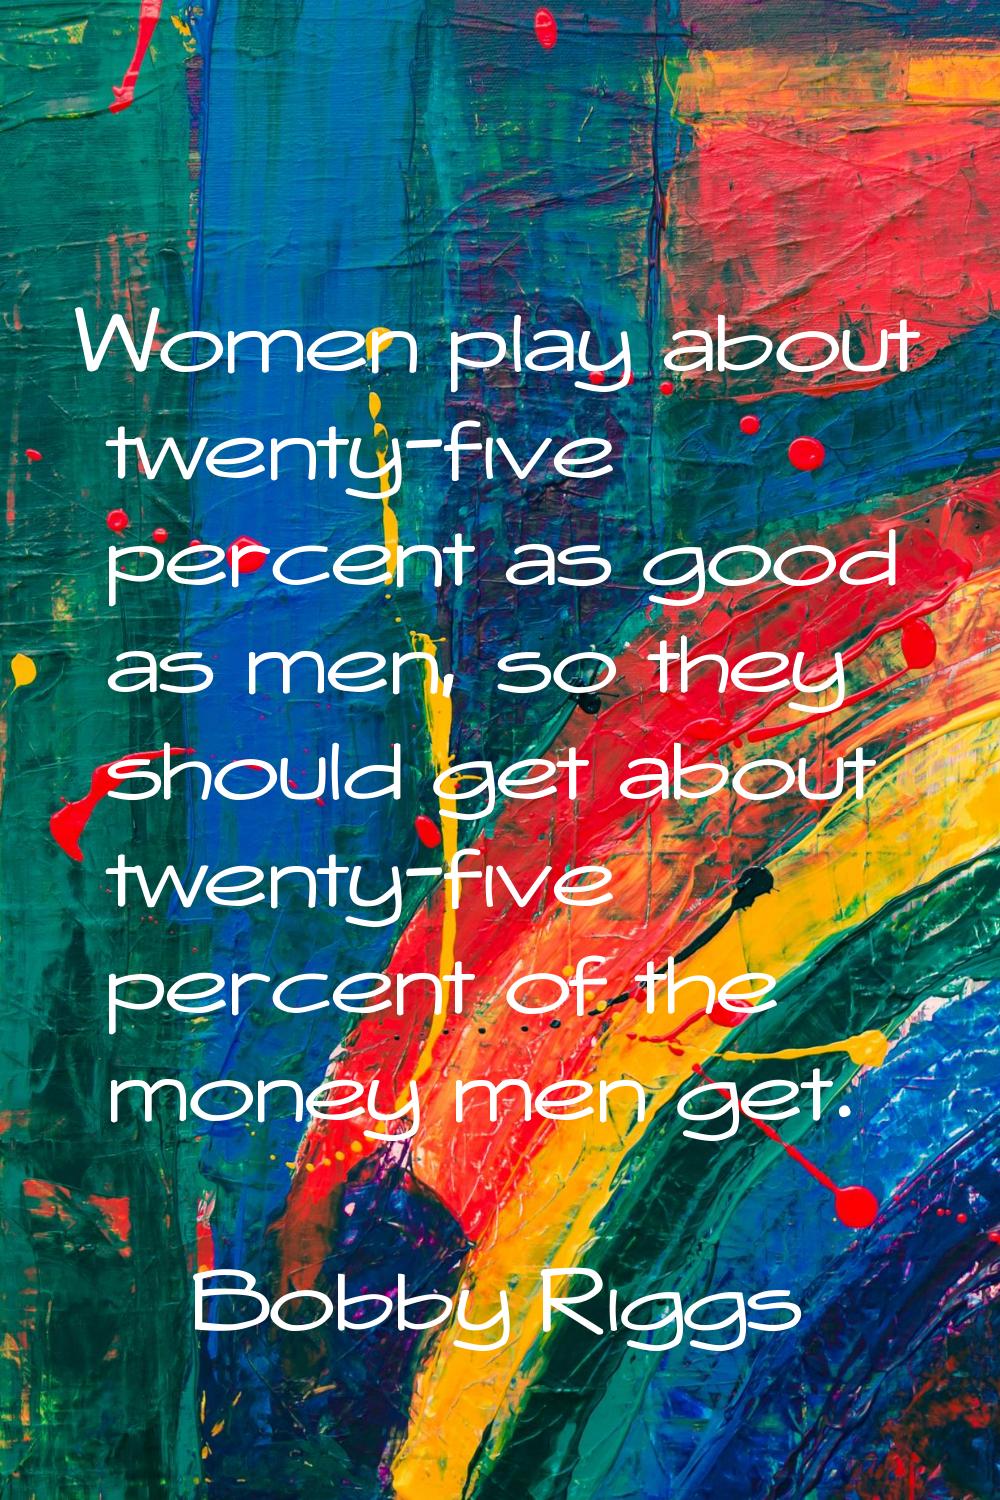 Women play about twenty-five percent as good as men, so they should get about twenty-five percent o